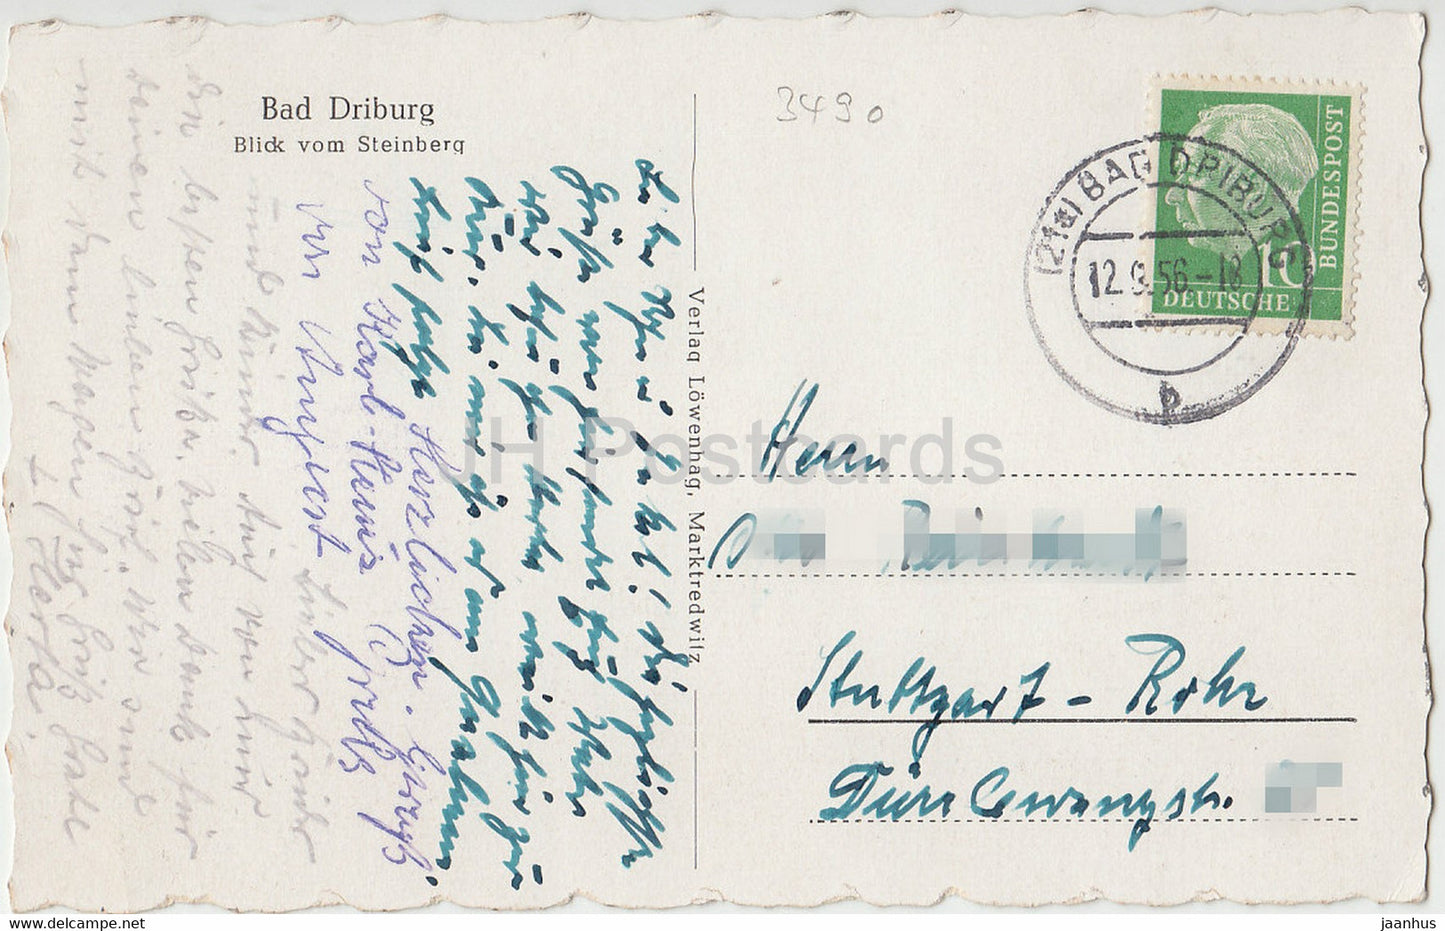 Bad Driburg - Blick vom Steinberg - old postcard - 1956 - Germany - used